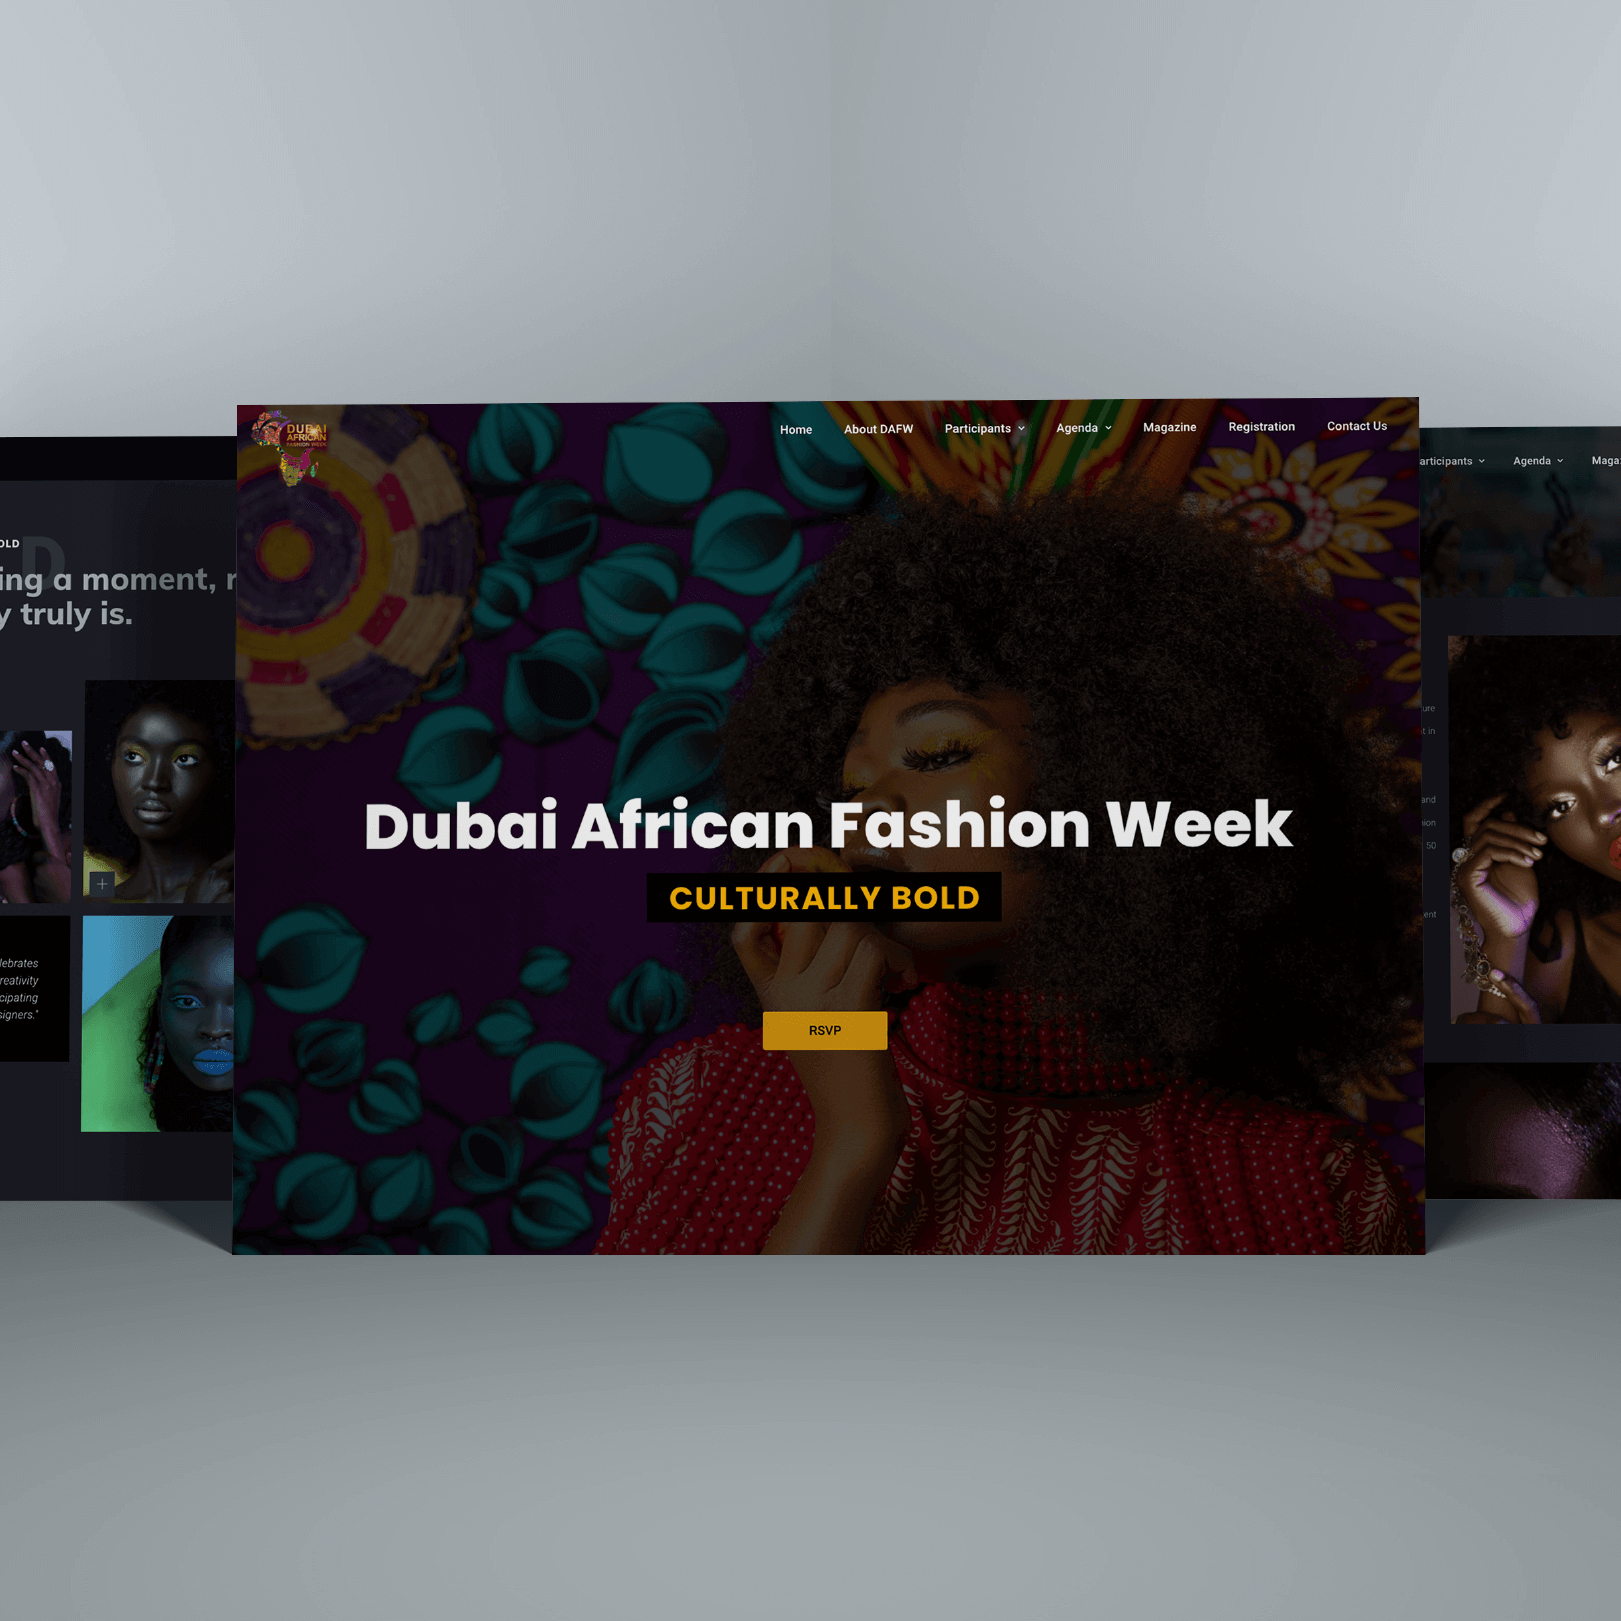 Dubai African Fashion Week